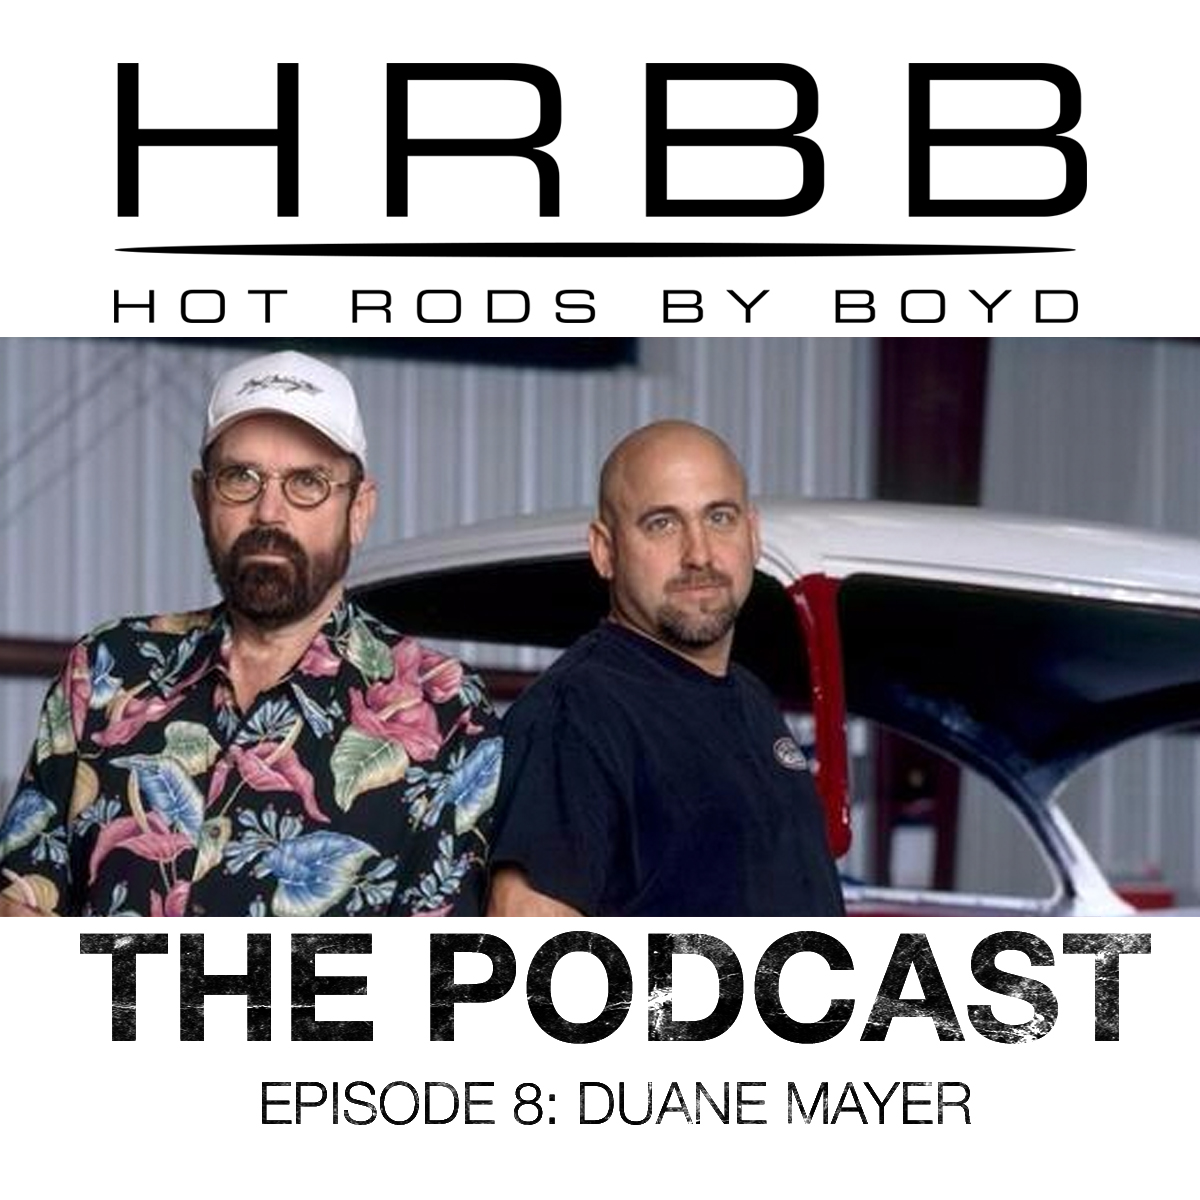 HRBB Podcast Ep8 - Duane Mayer